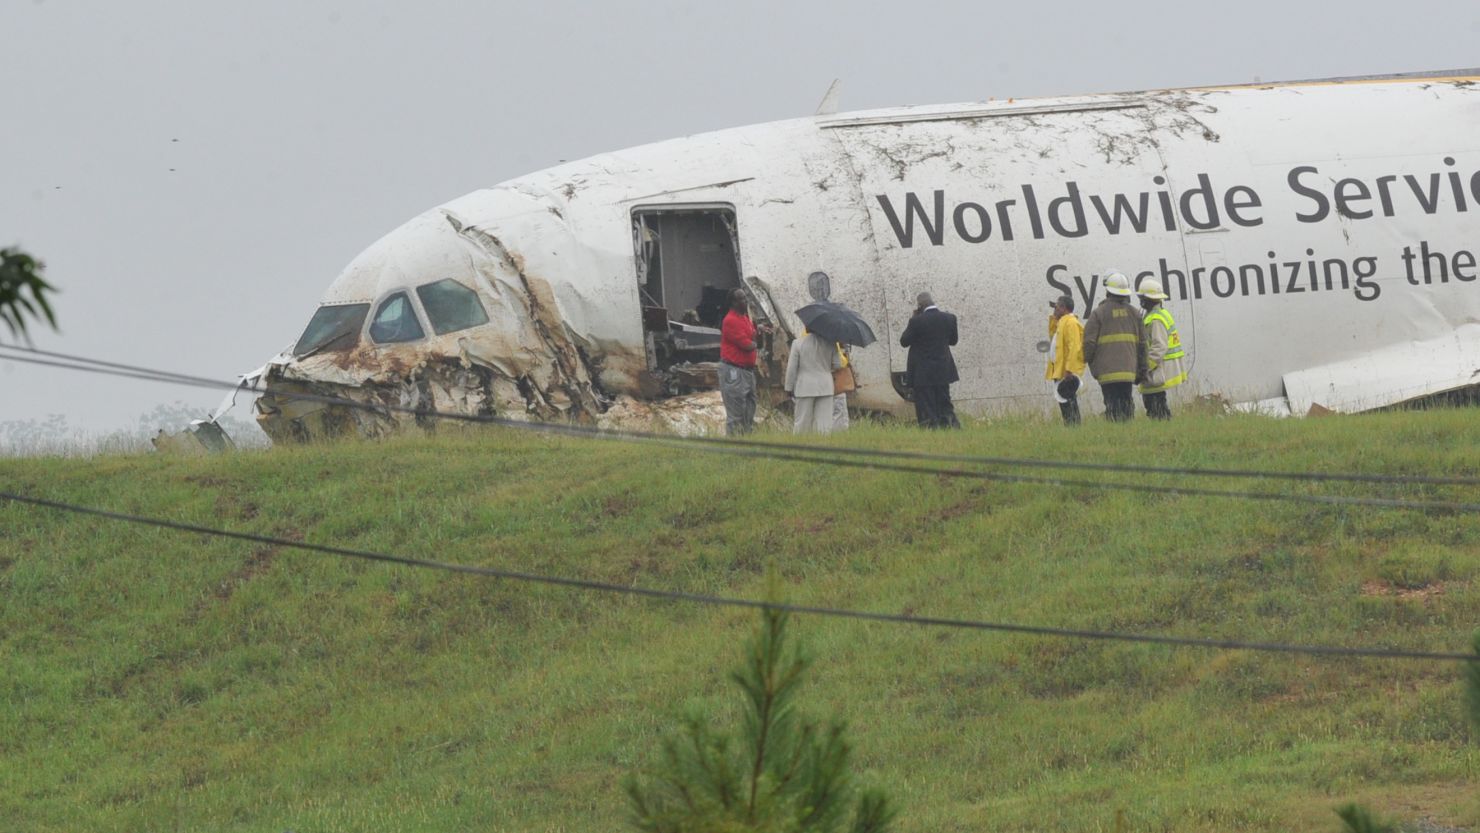  A UPS cargo plane crashed near a Birmingham, Alabama, airport on August 14, 2013.    